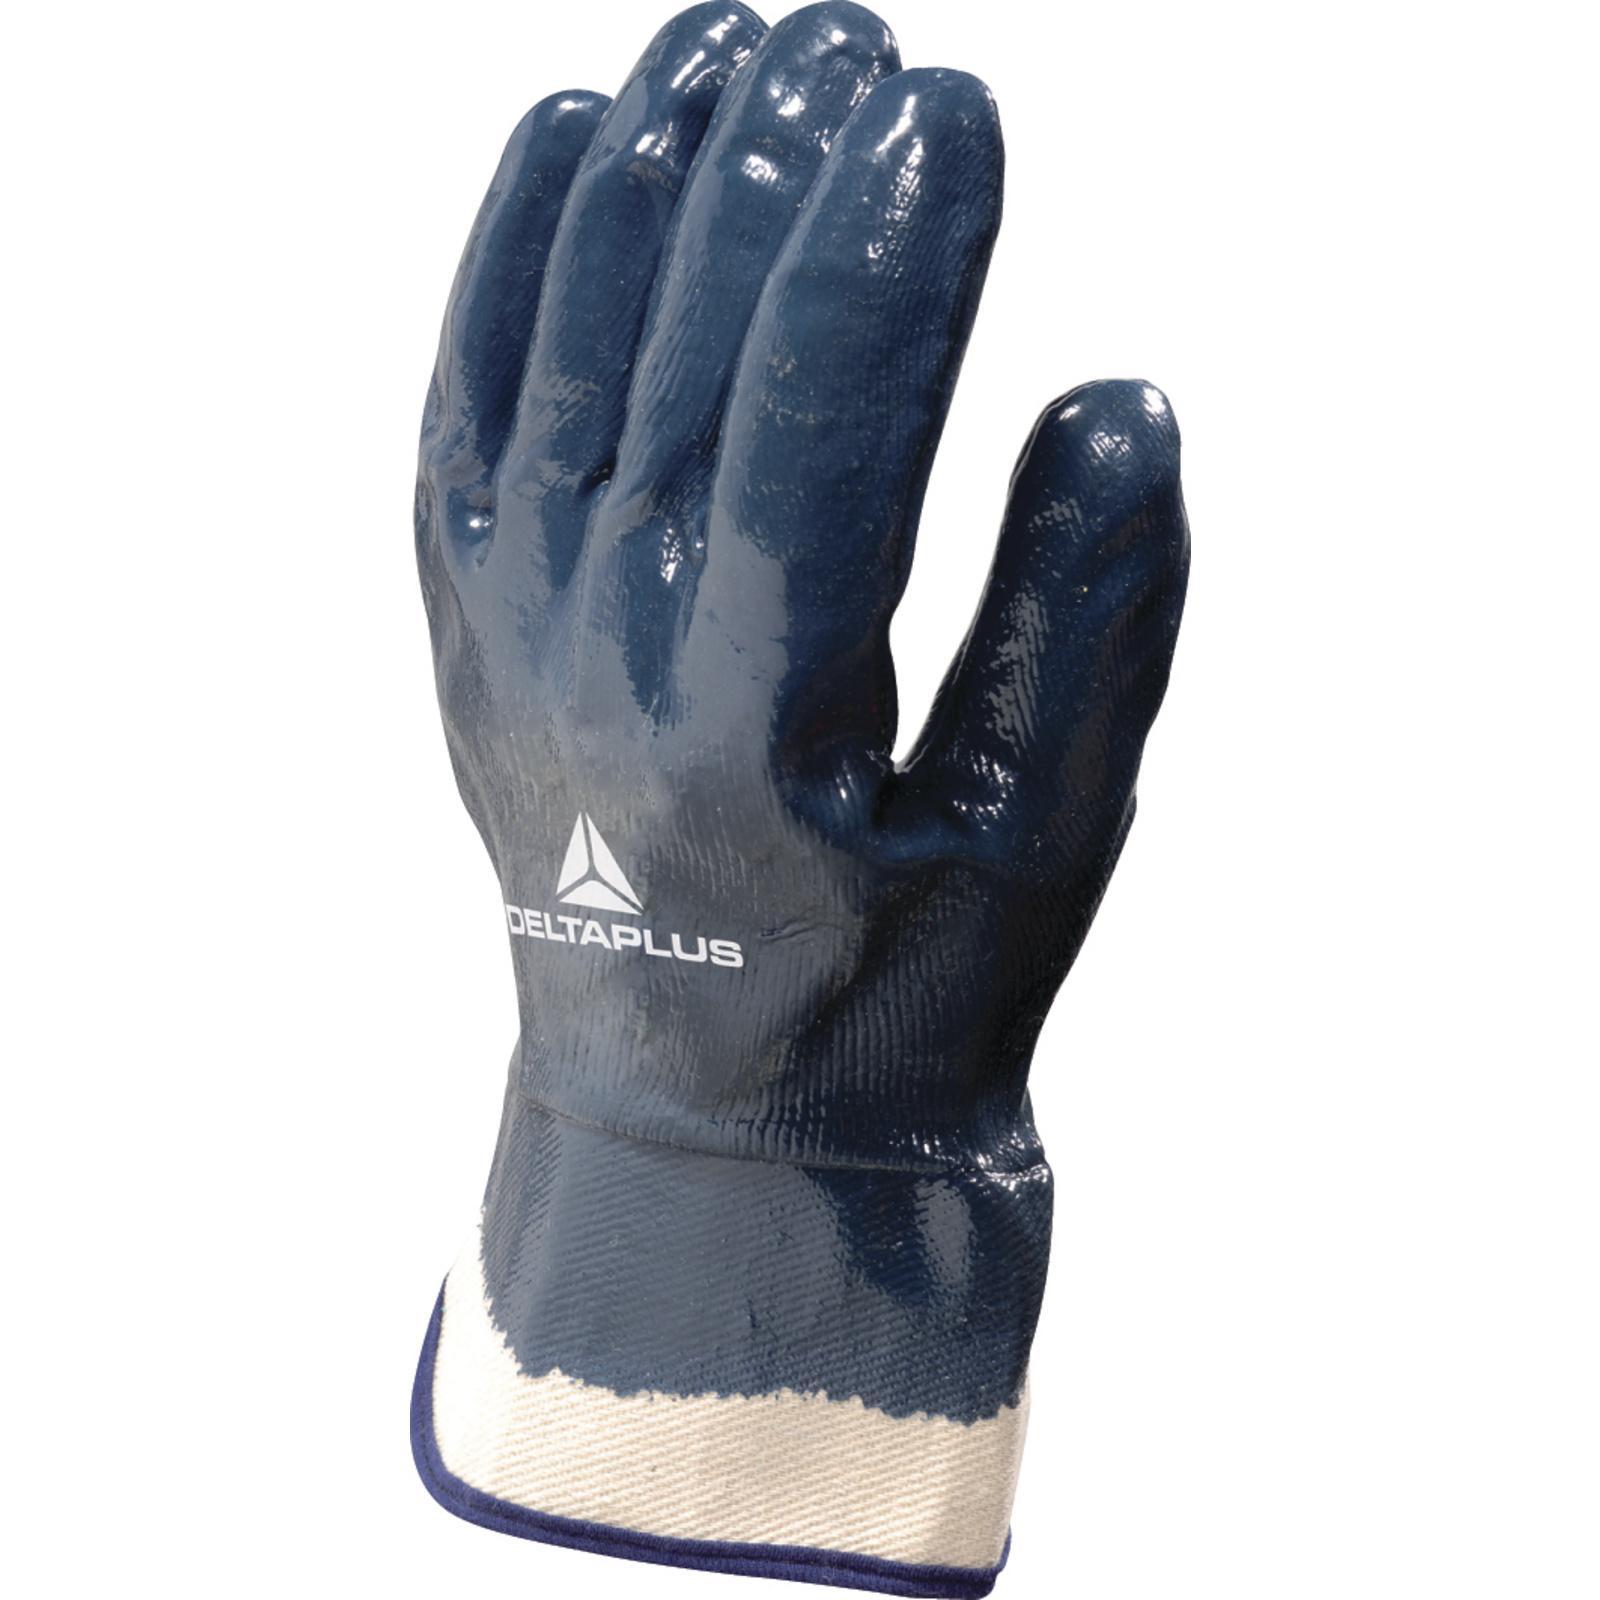 Delta Plus Venitex VE440 Quality Blue Latex Washing Up Rubber Gloves Marigolds 